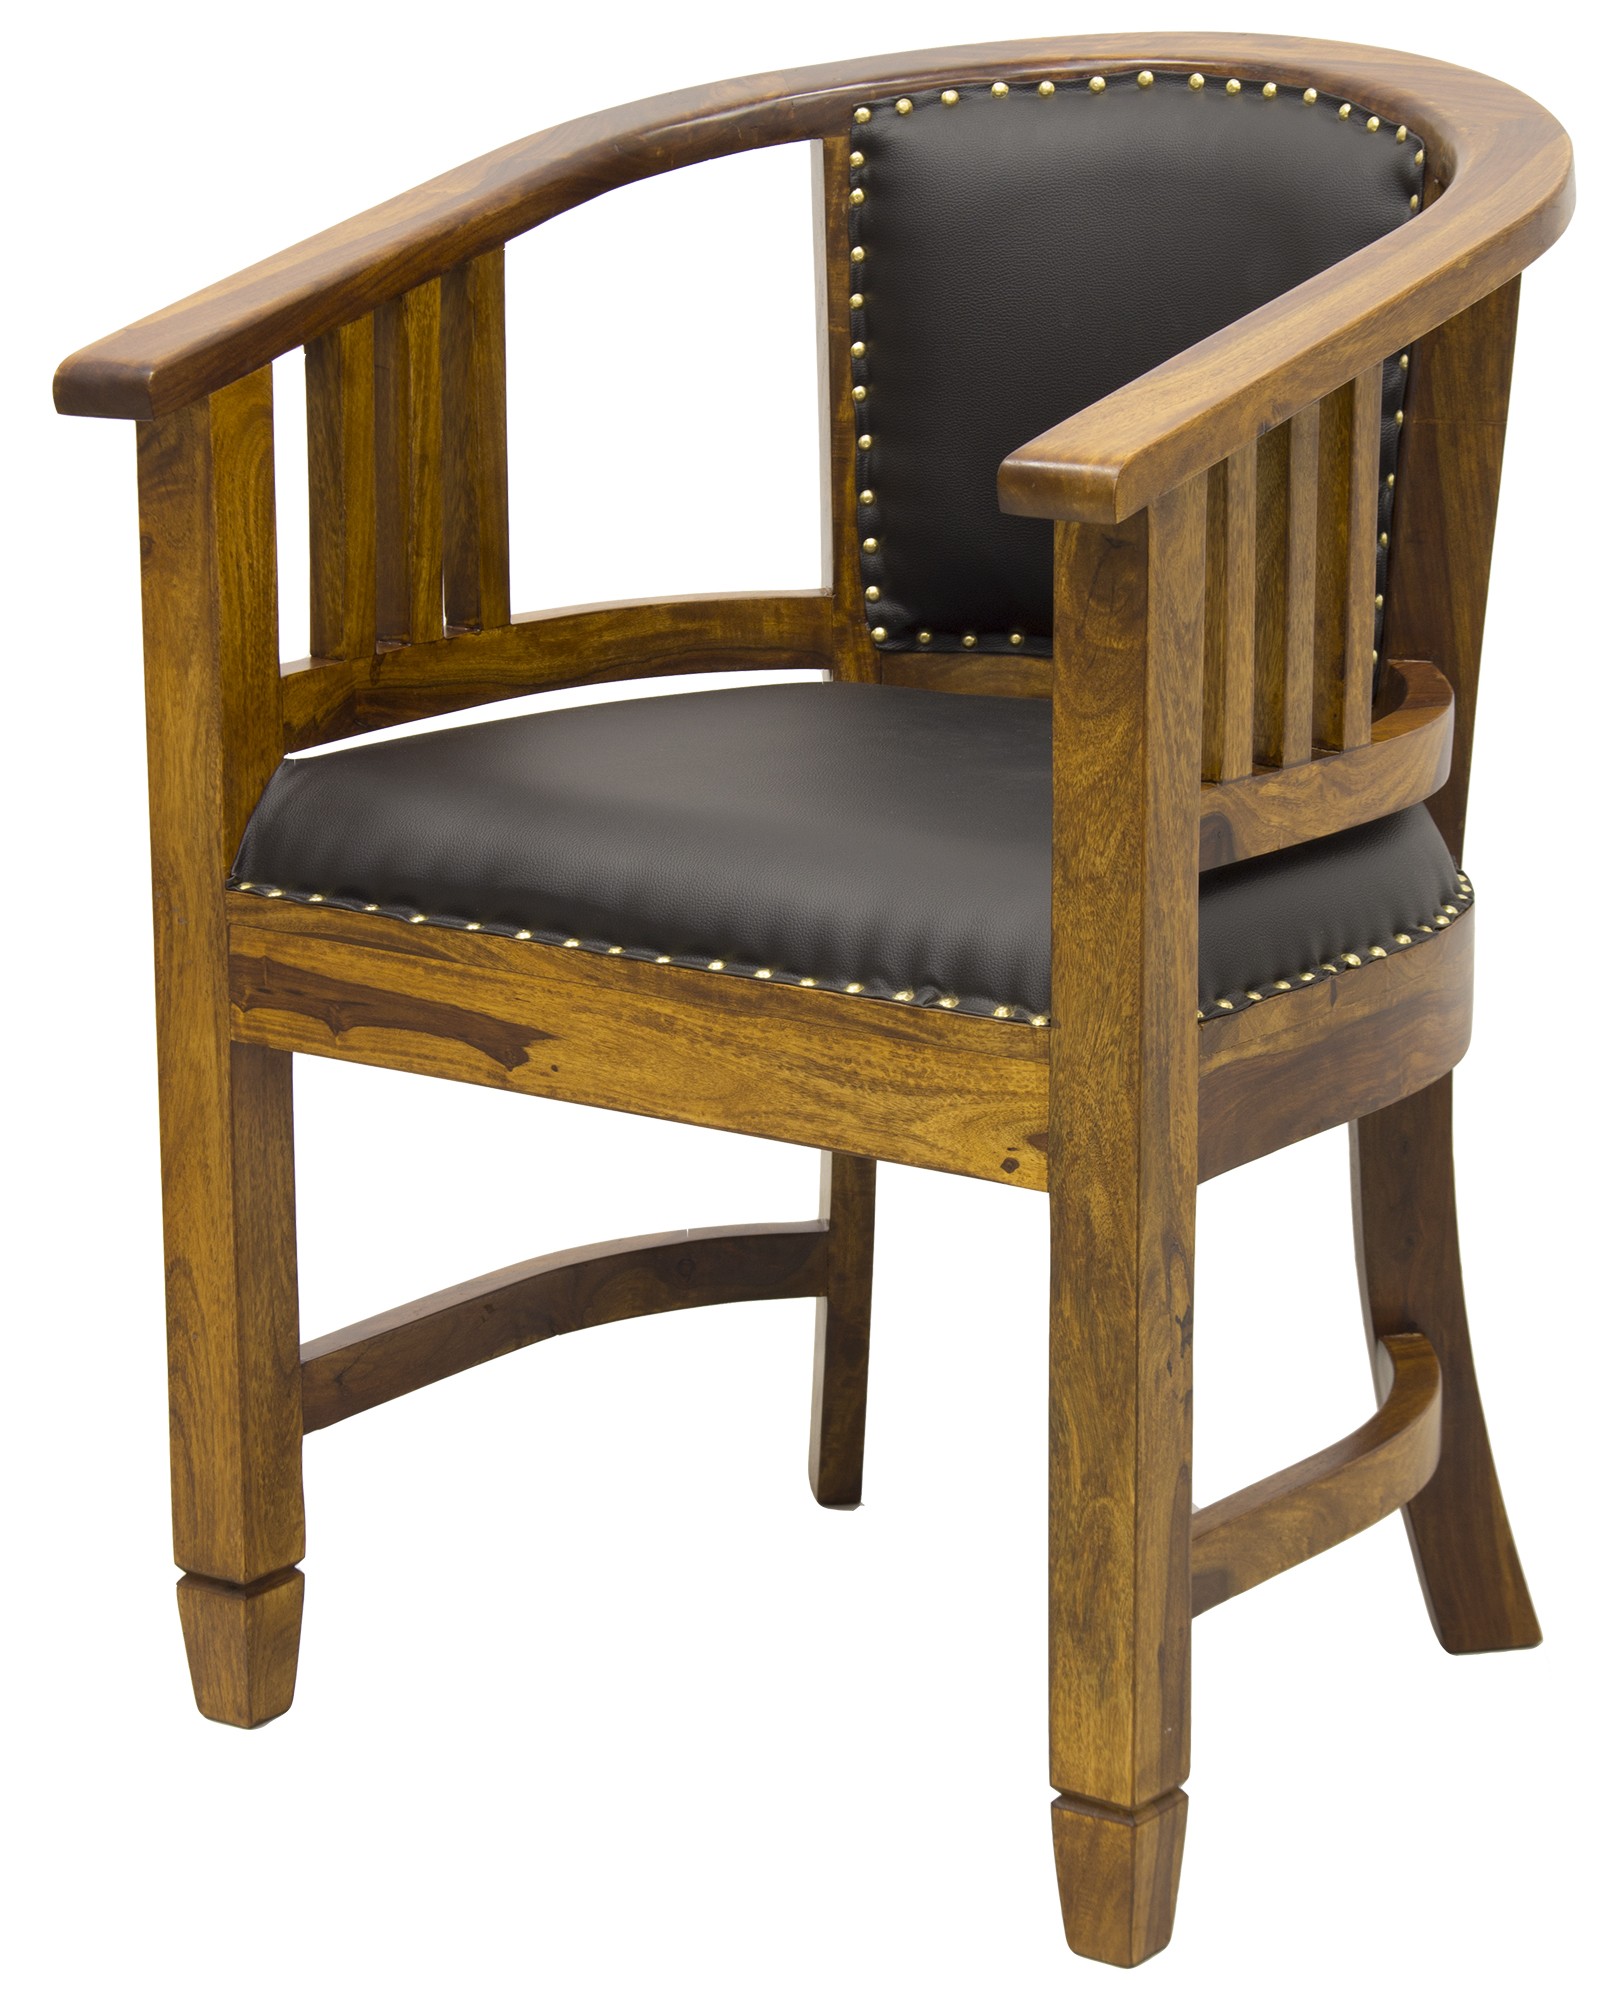 židle 131602